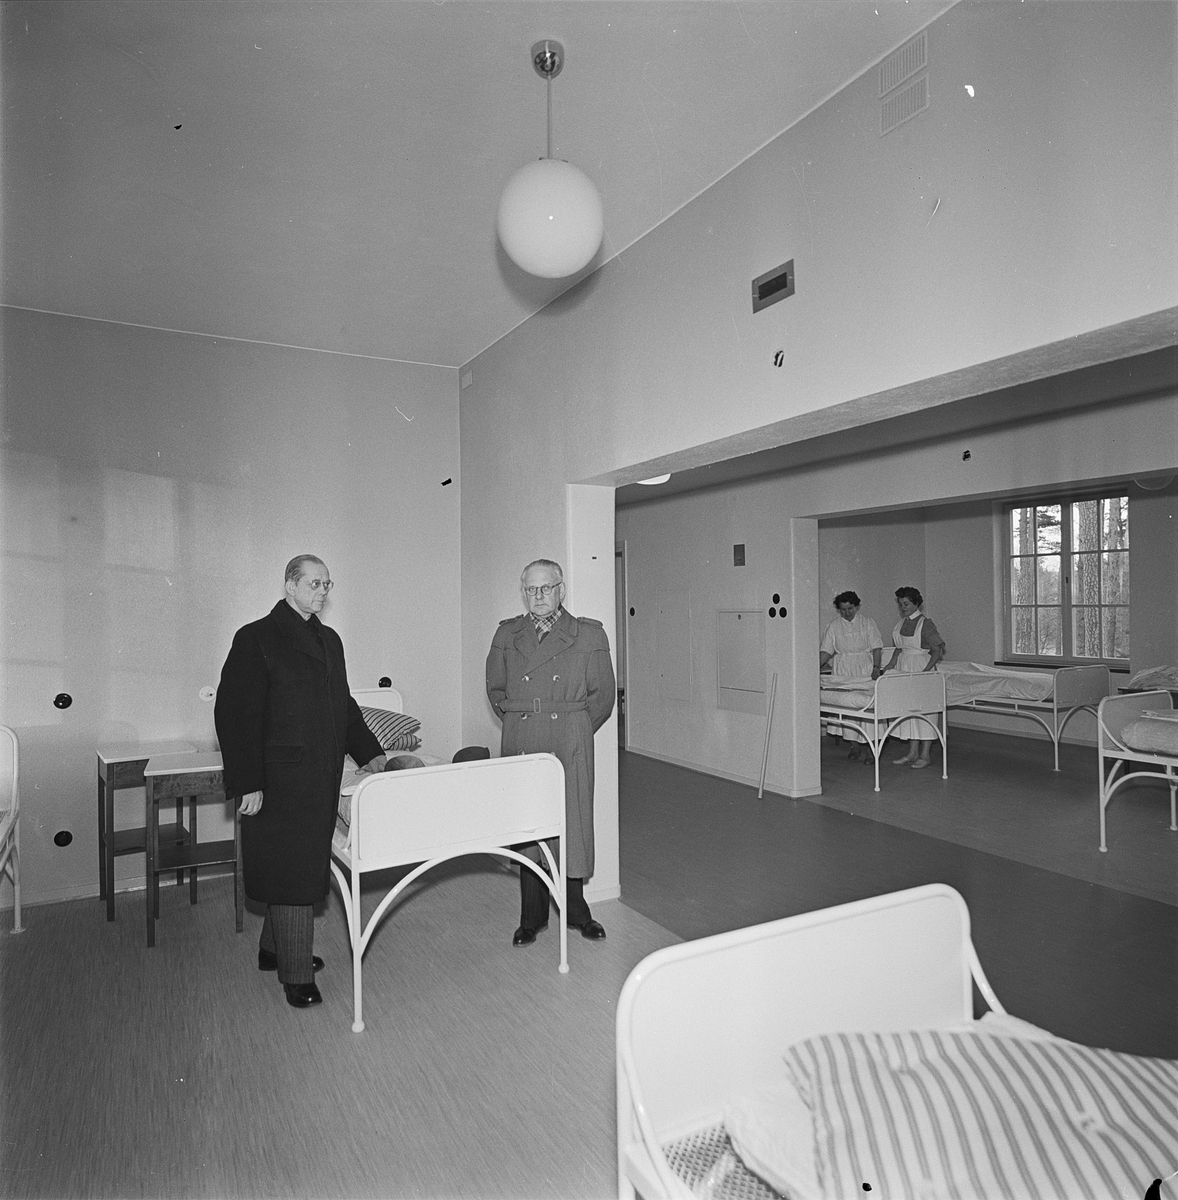 Ulleråkers sjukhus, Uppsala 1956